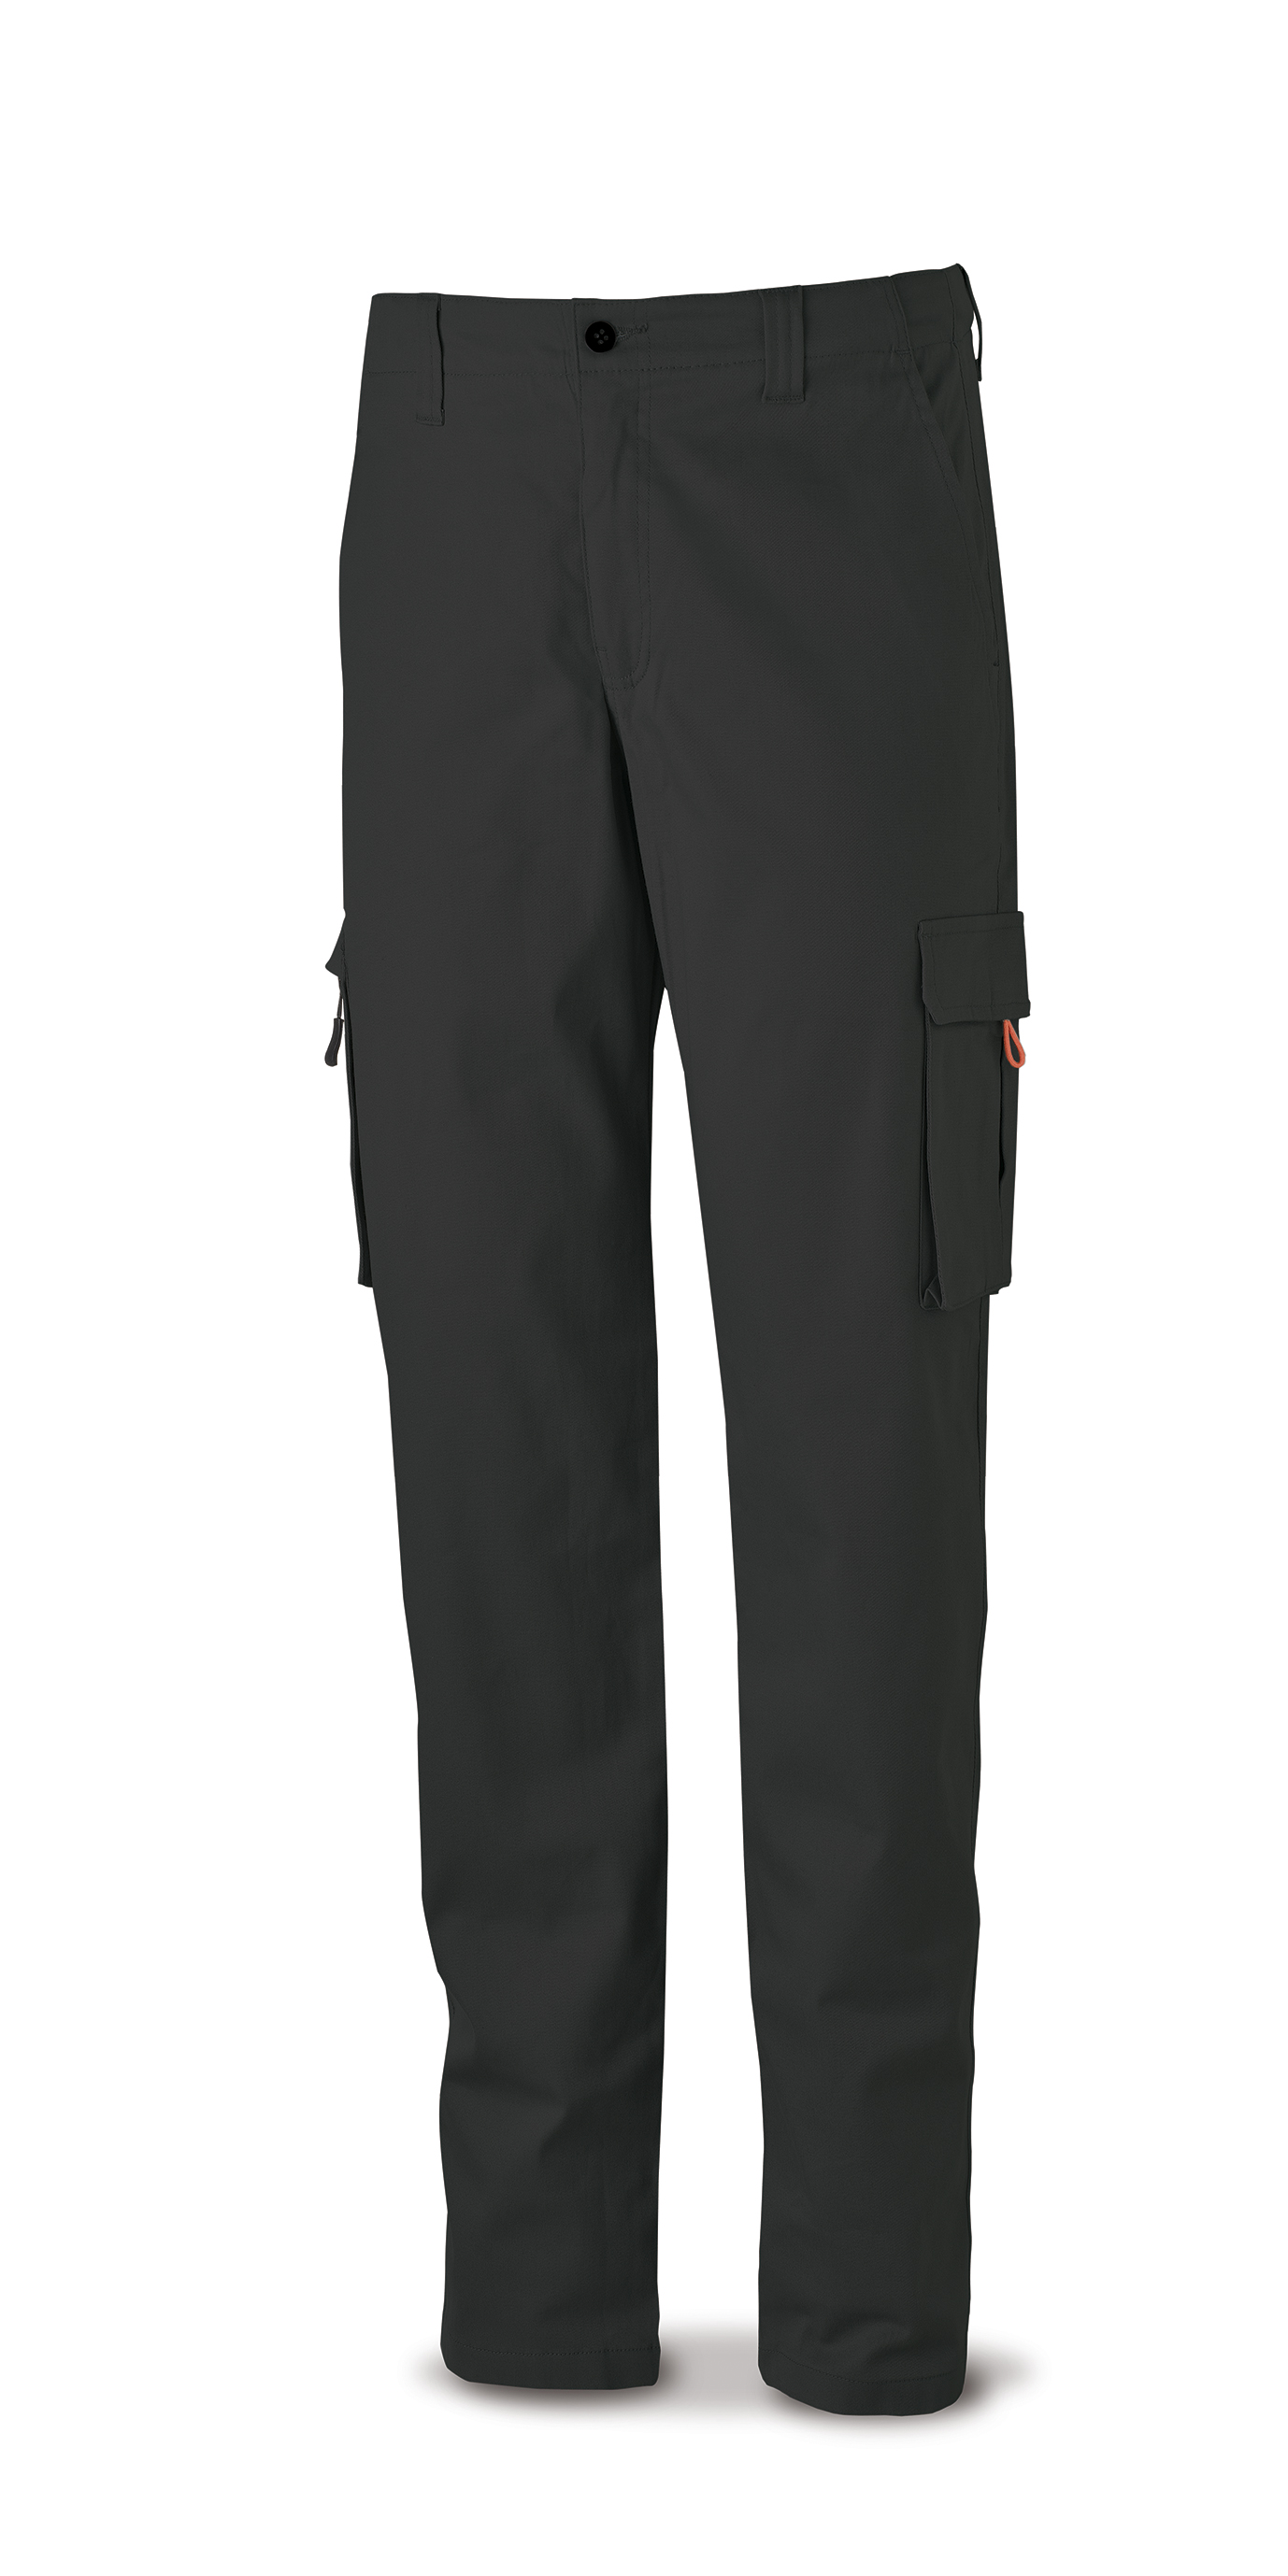 588-PELASRN Workwear Casual Series ELASTIC cotton and Elastane pants. Khaki.